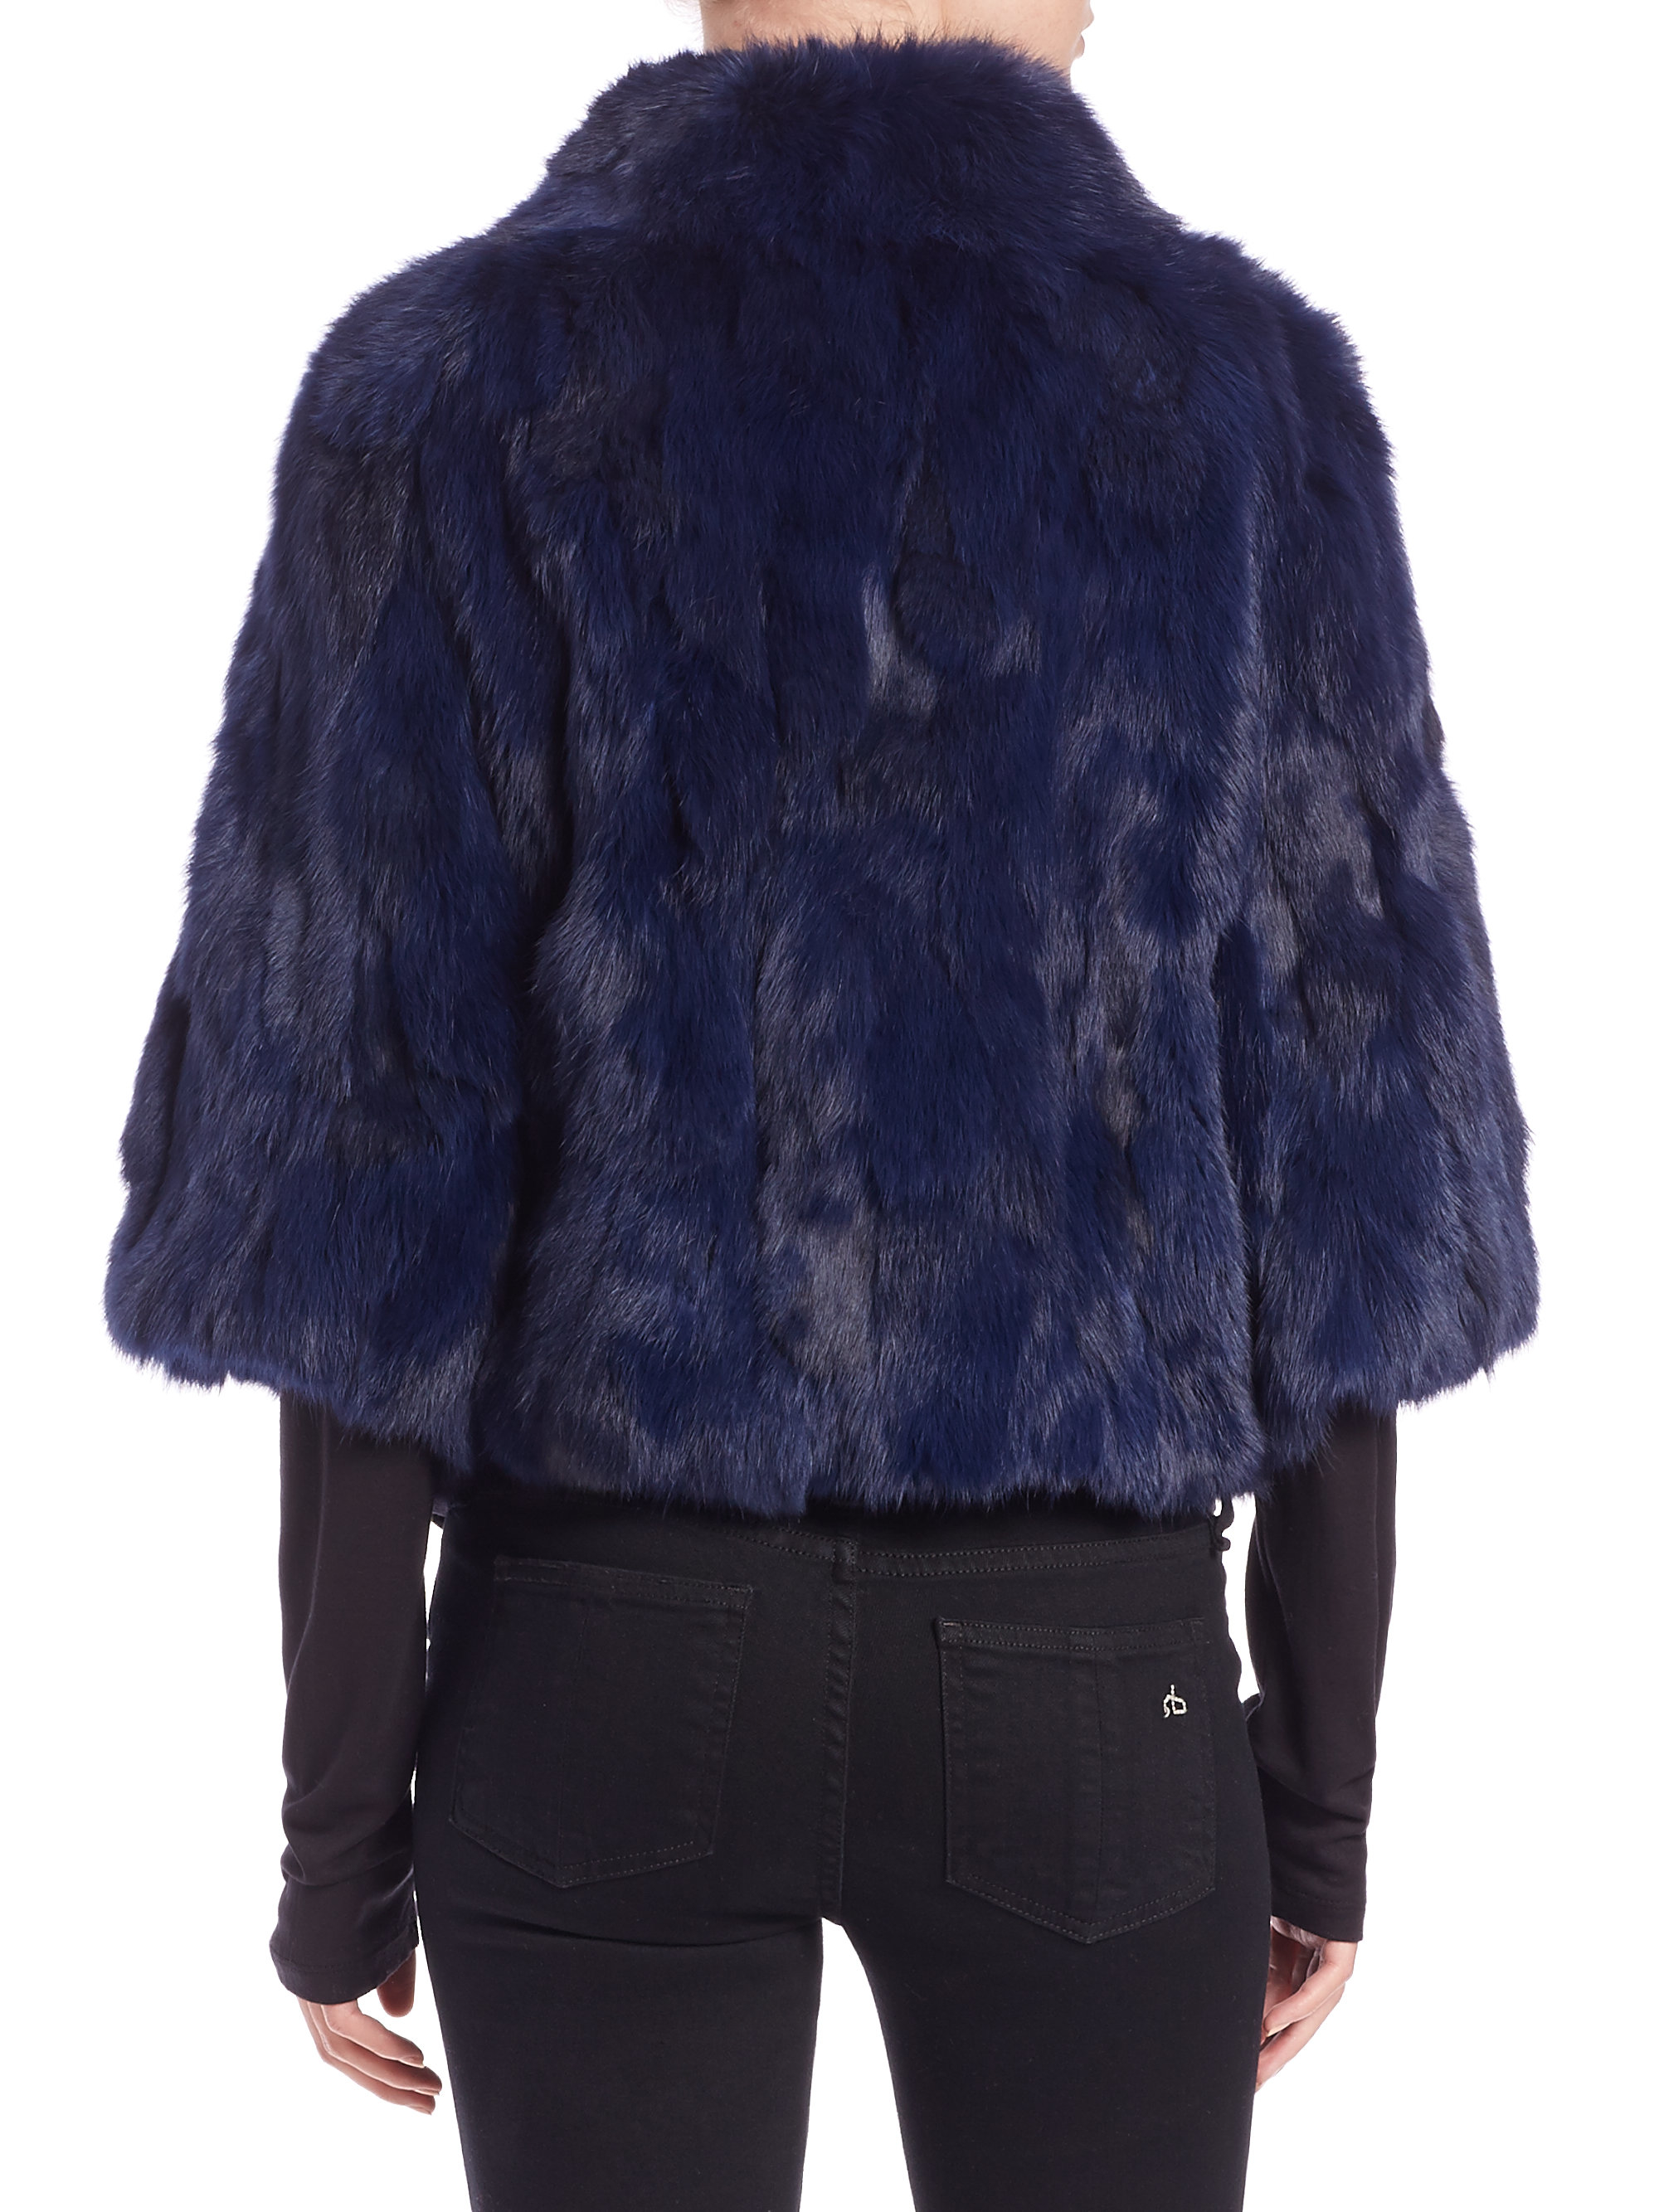 Lyst - Adrienne Landau Cropped Textured Rabbit Fur Jacket in Blue